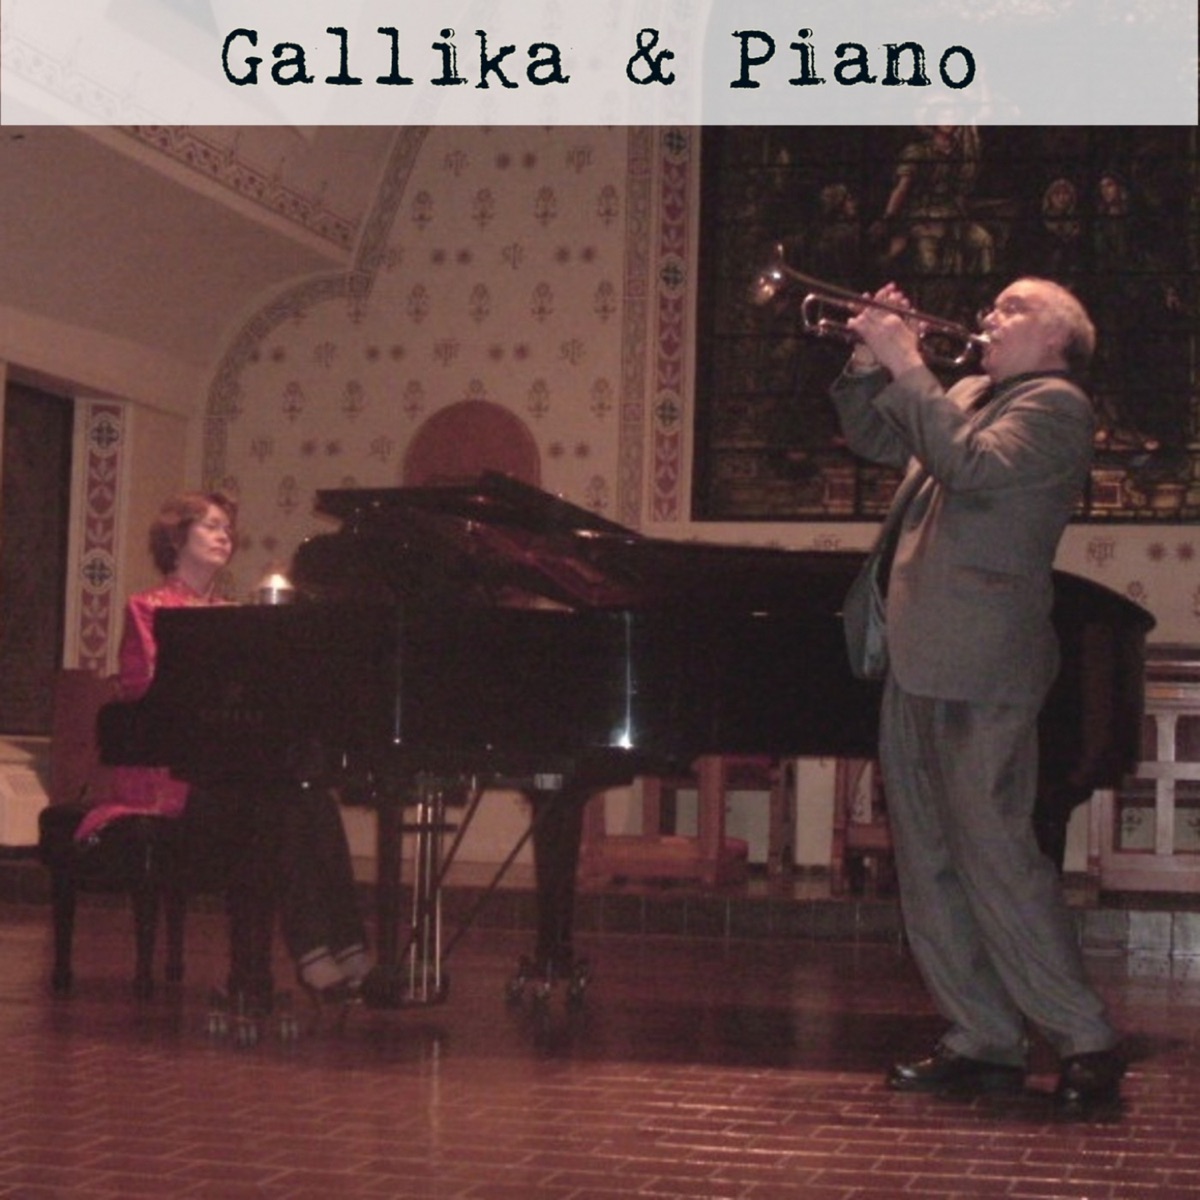 Gallika & Piano - Single - Album by iLLEOo - Apple Music